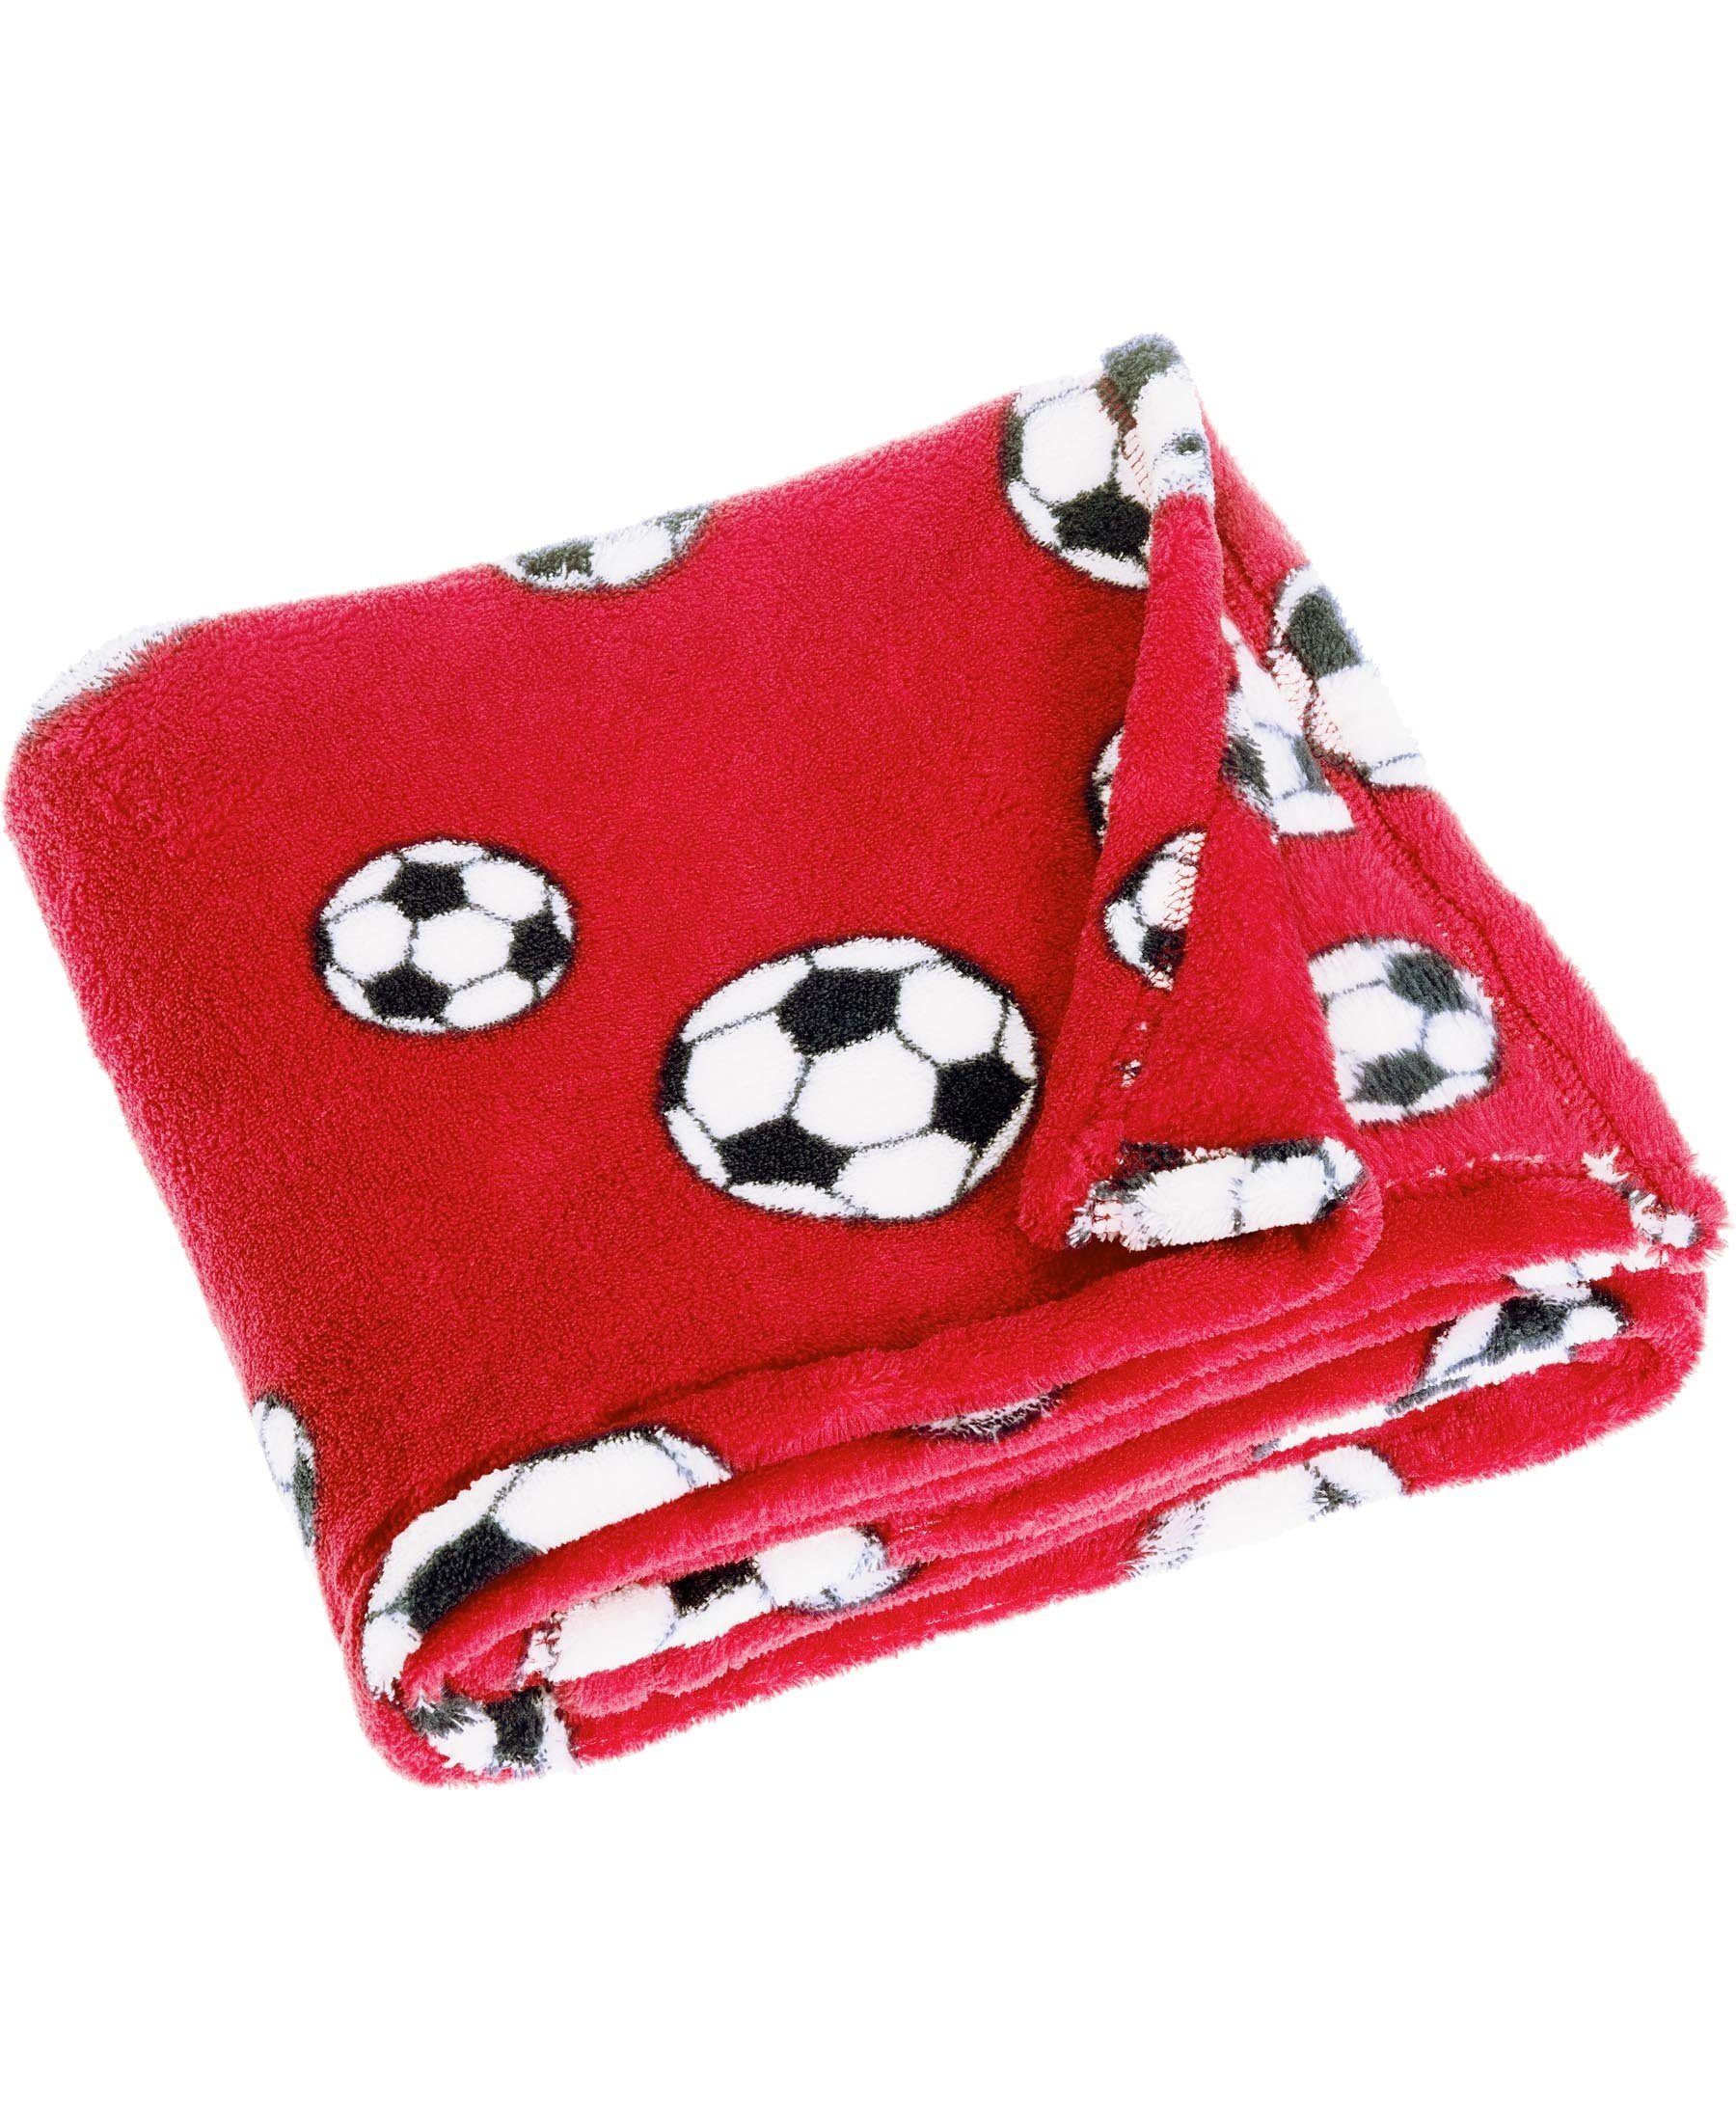 Babydecke Fleece-Decke Fußball, Playshoes rot | Kuscheldecken